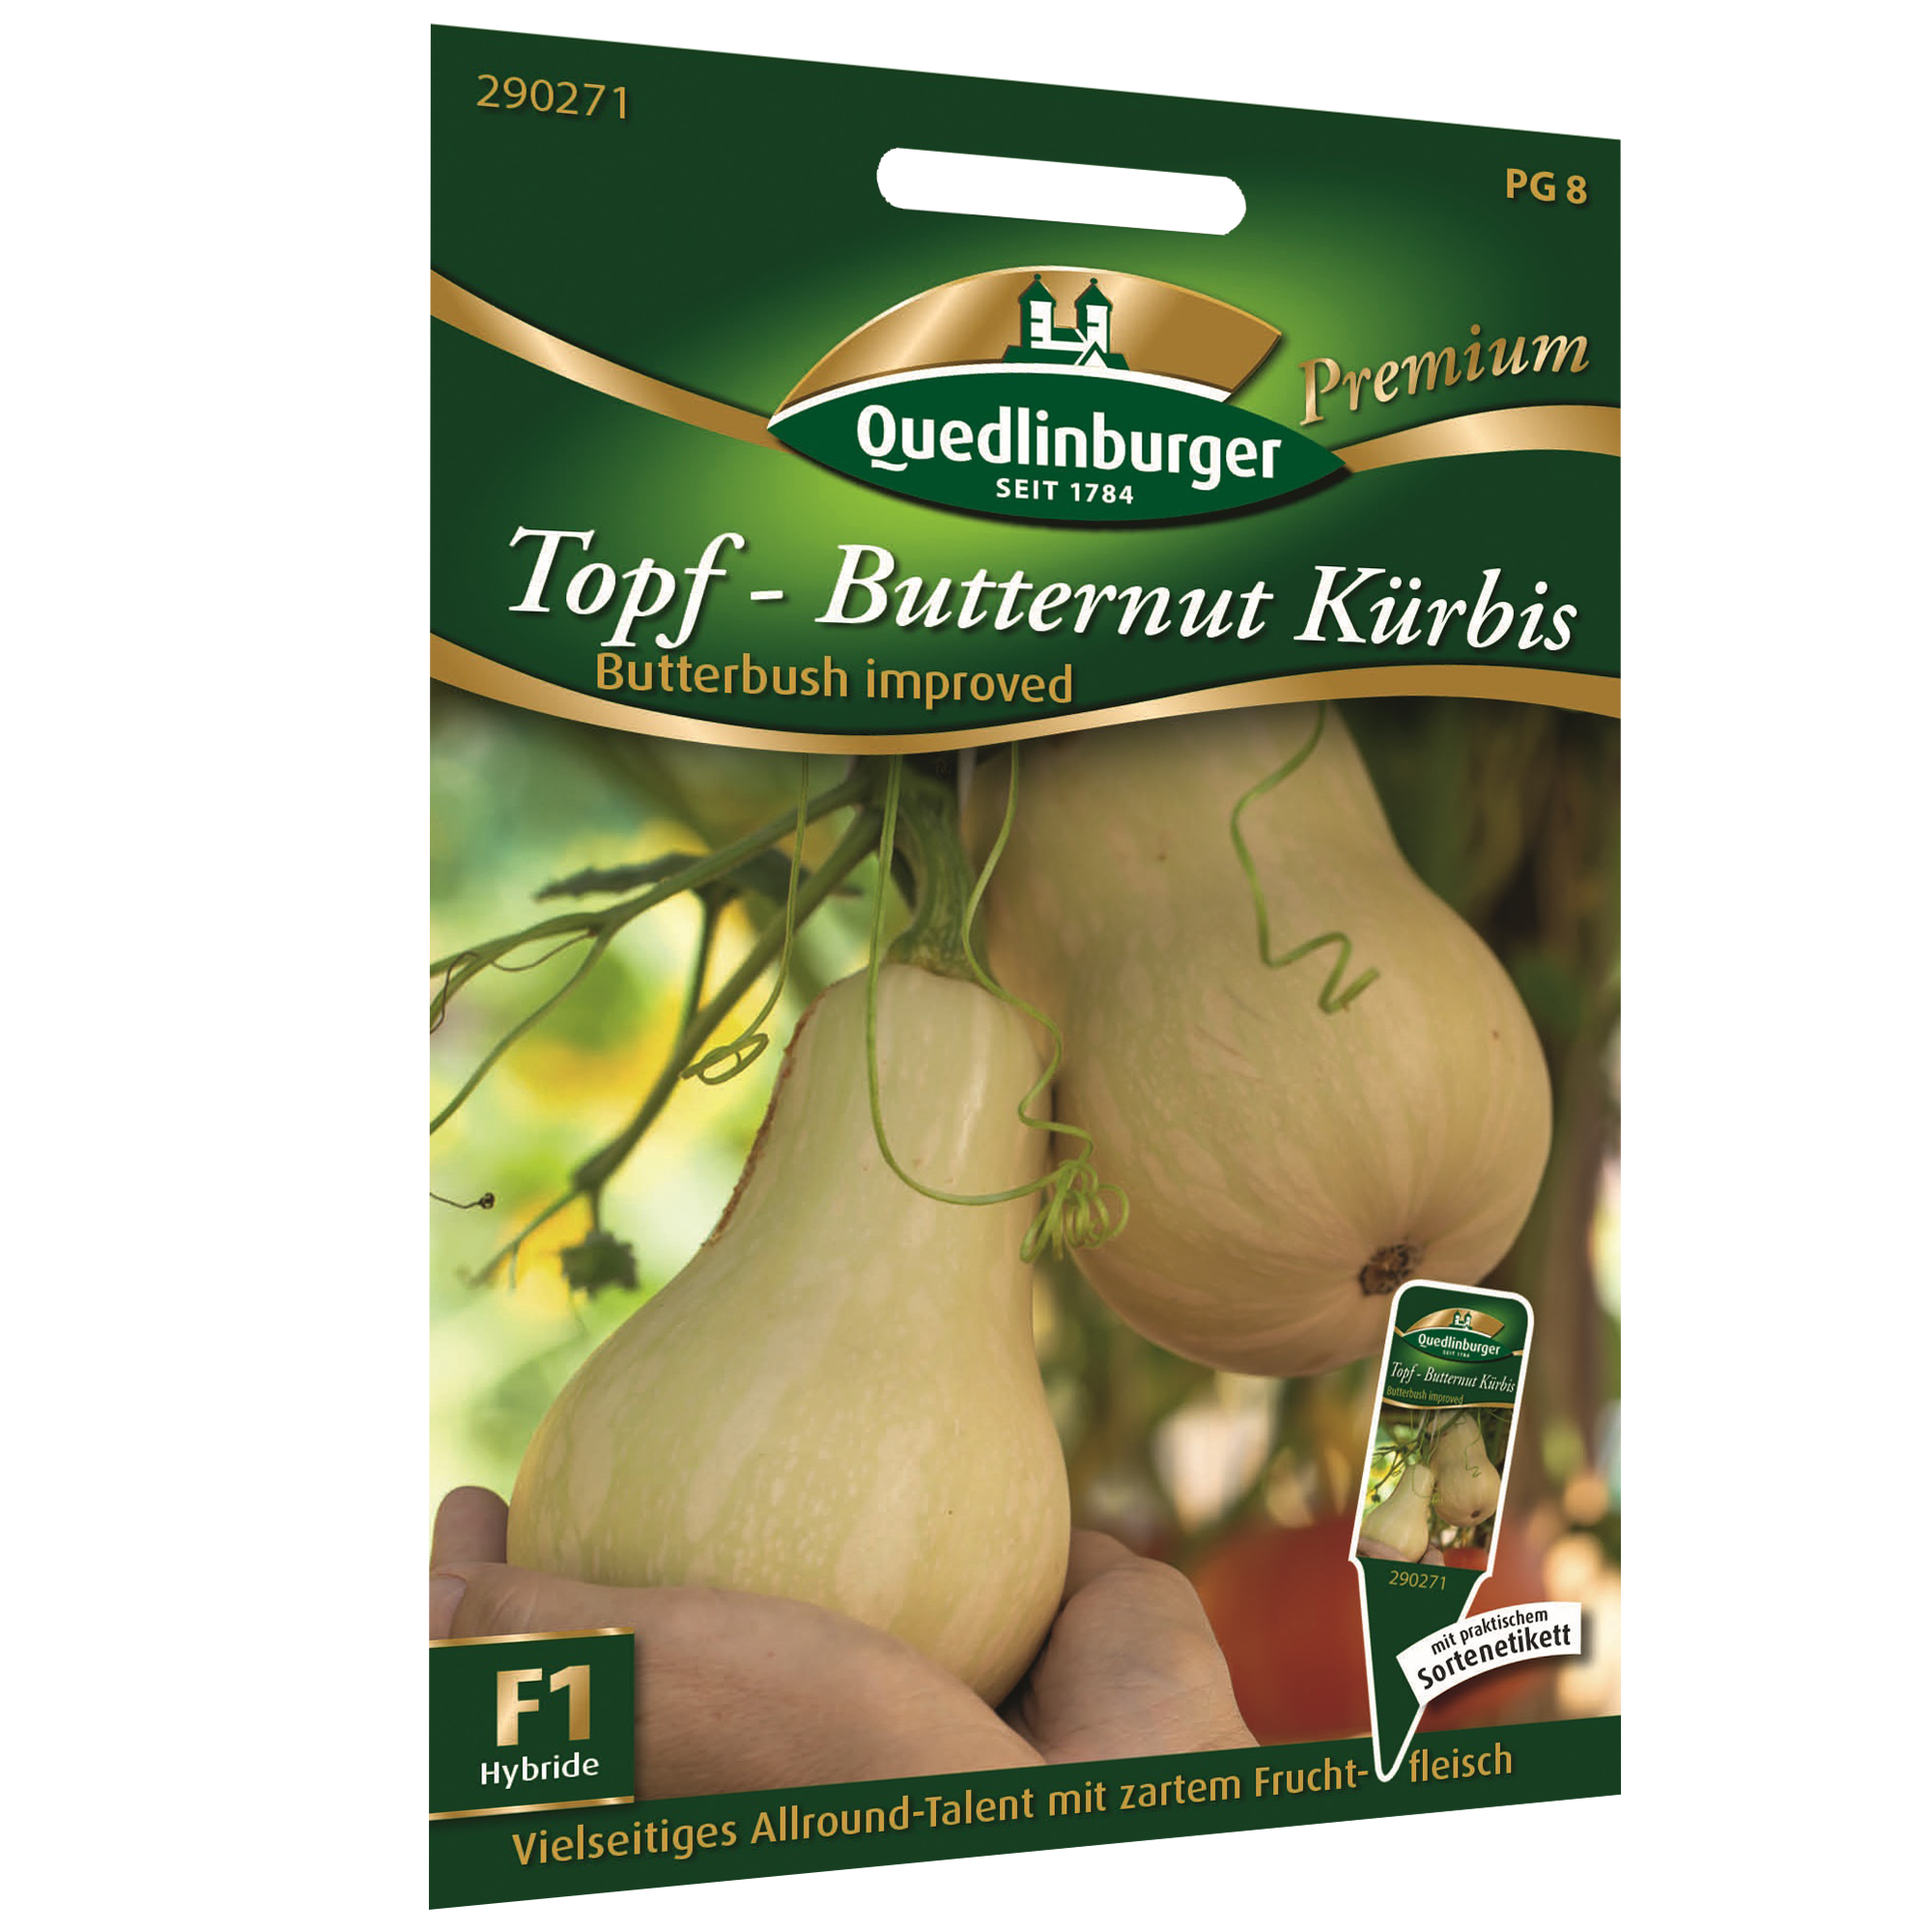 Topf-Butternut Kürbis 'Butterbush improved' + product picture